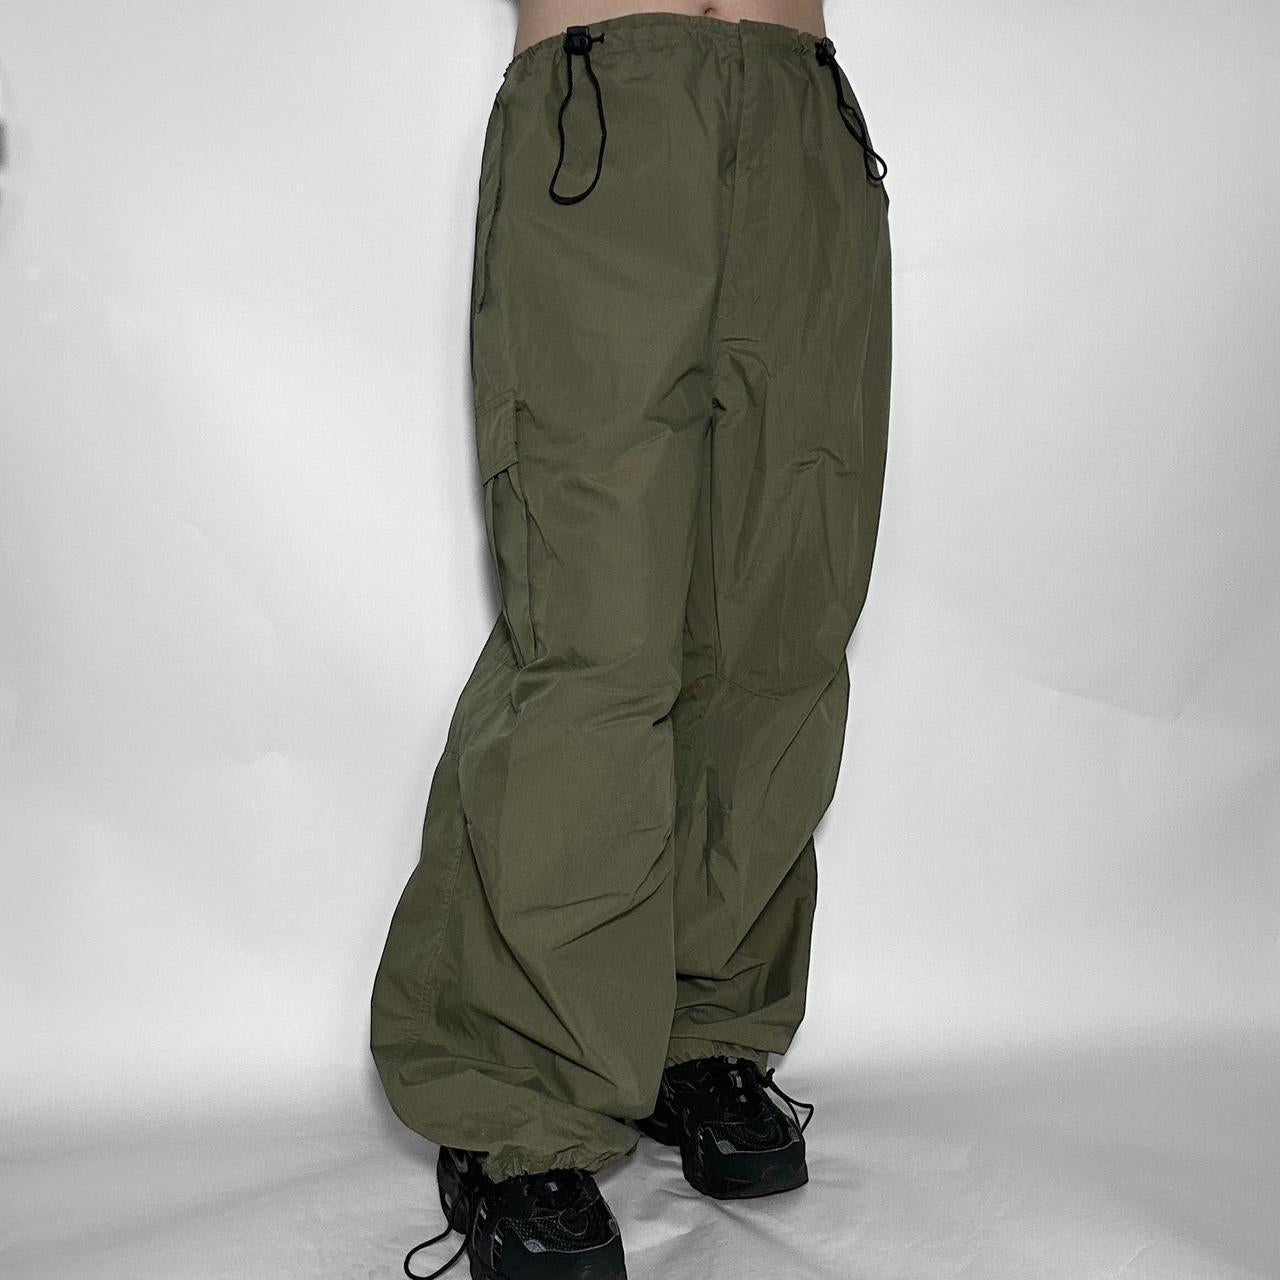 Vintage 90s khaki adjustable unisex parachute pants